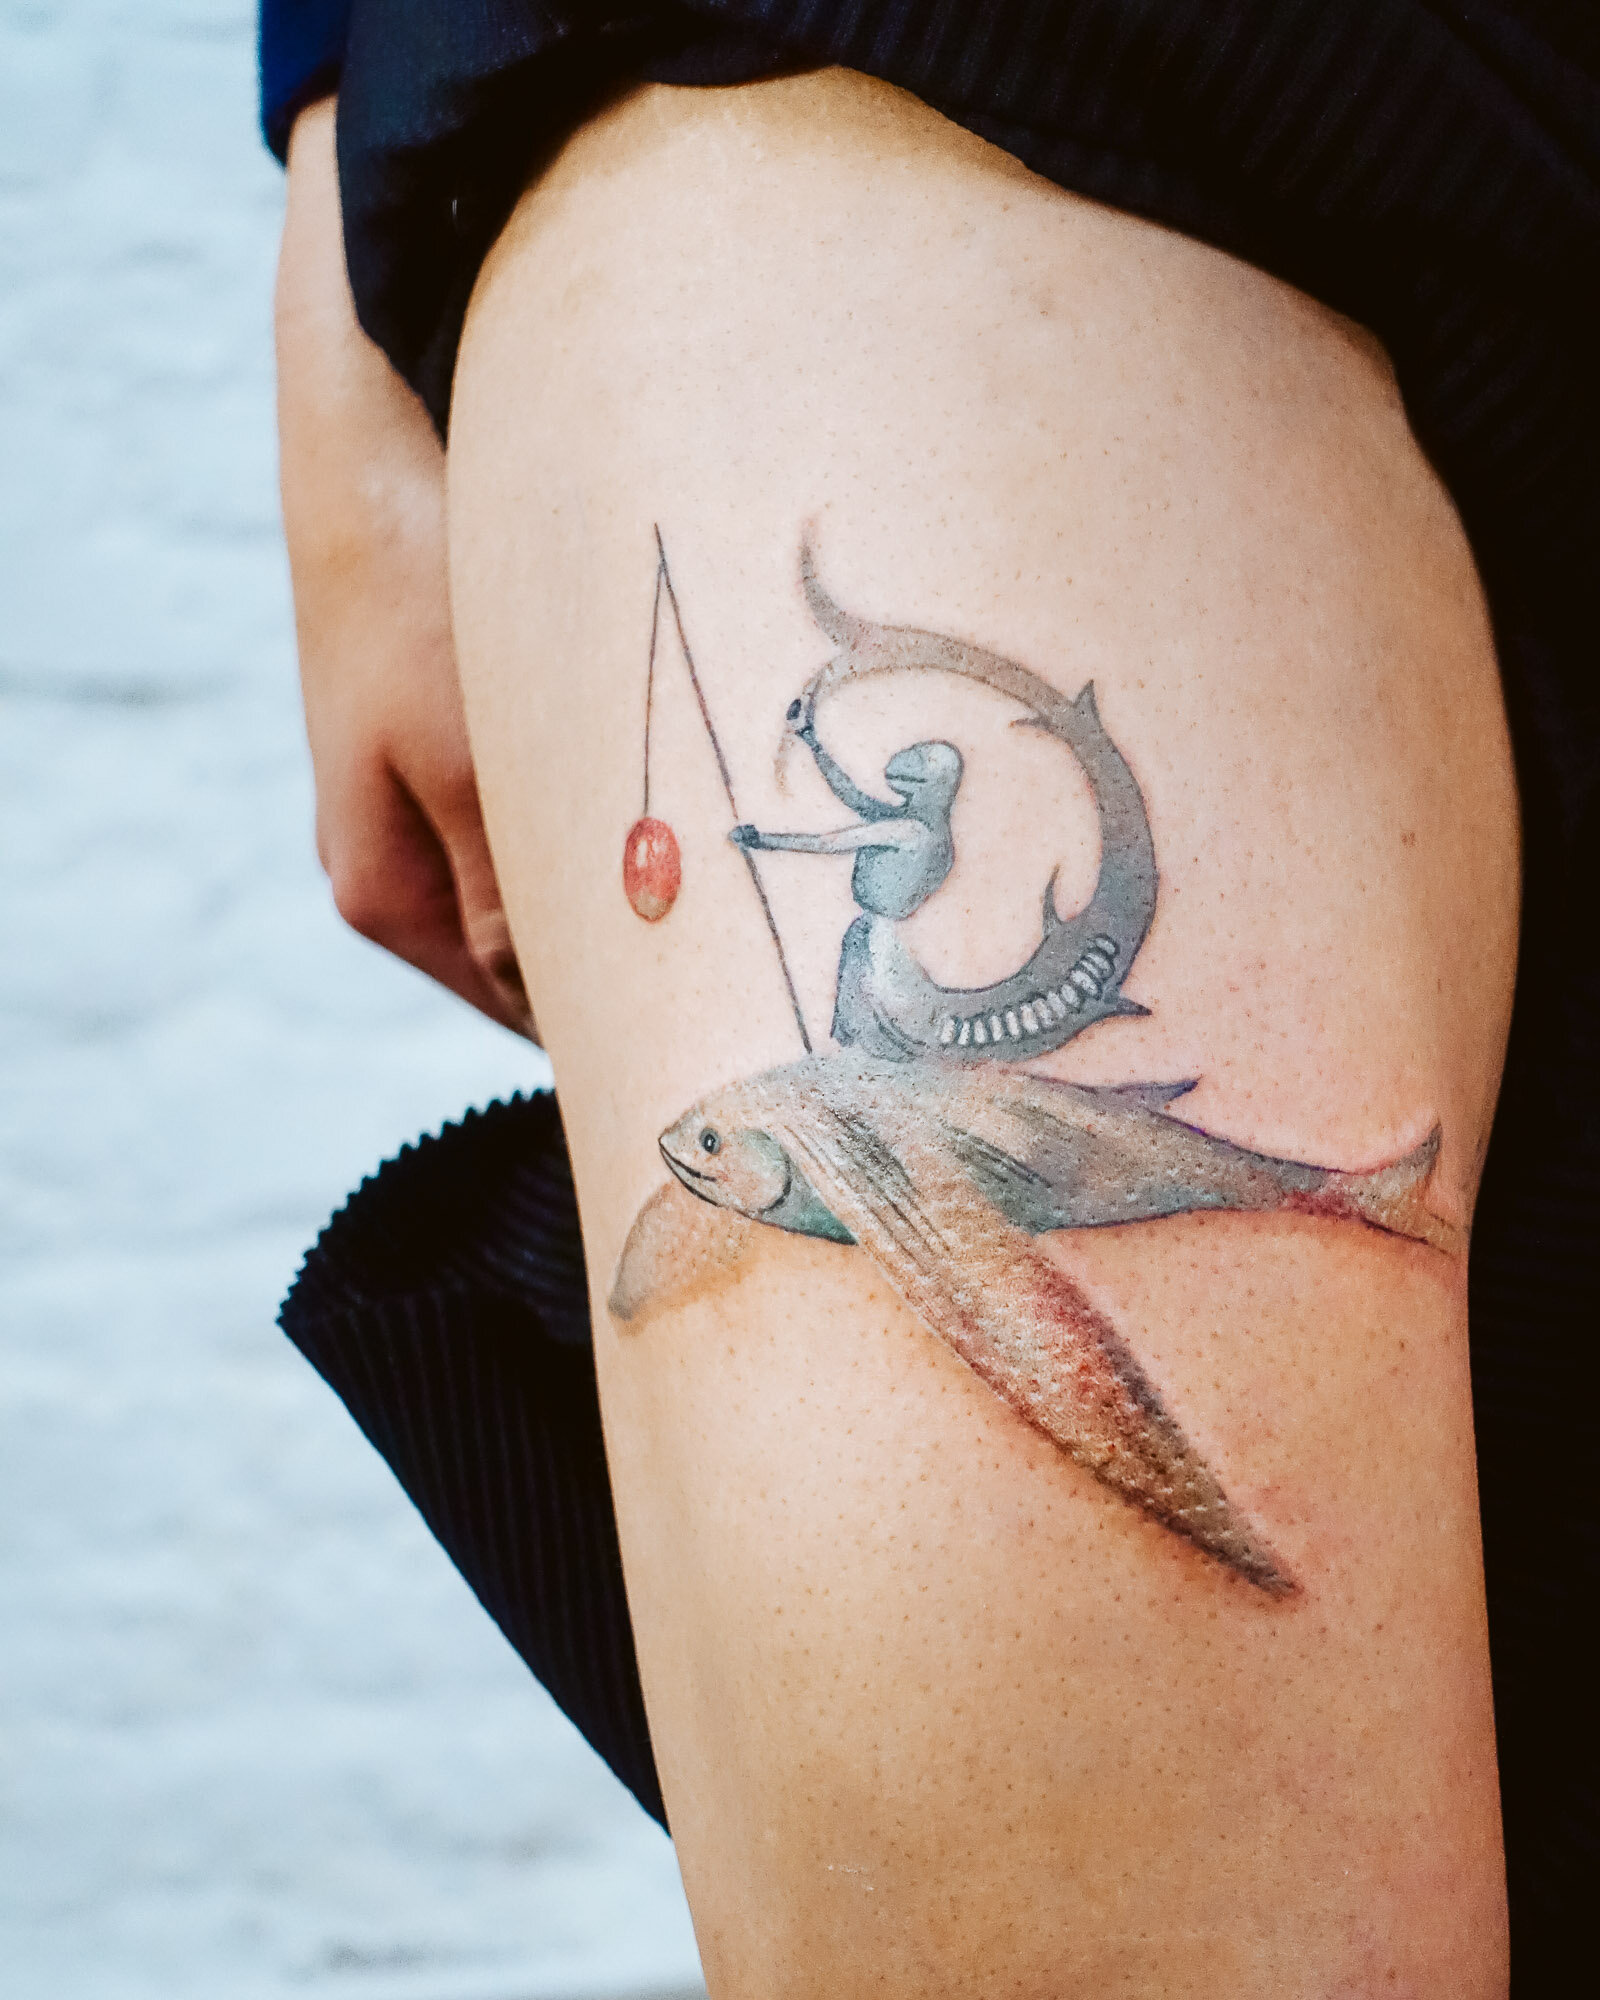 Tattoo uploaded by Tattoodo • Hieronymus Bosch tattoo by Fabien Grezyn  #FabienGrezyn #arttattoos #color #painting #famouspainting #hieronymusbosch  #bosch #realism #realistic #illustrative #surreal #owl #fruit #dance  #tattoooftheday • Tattoodo